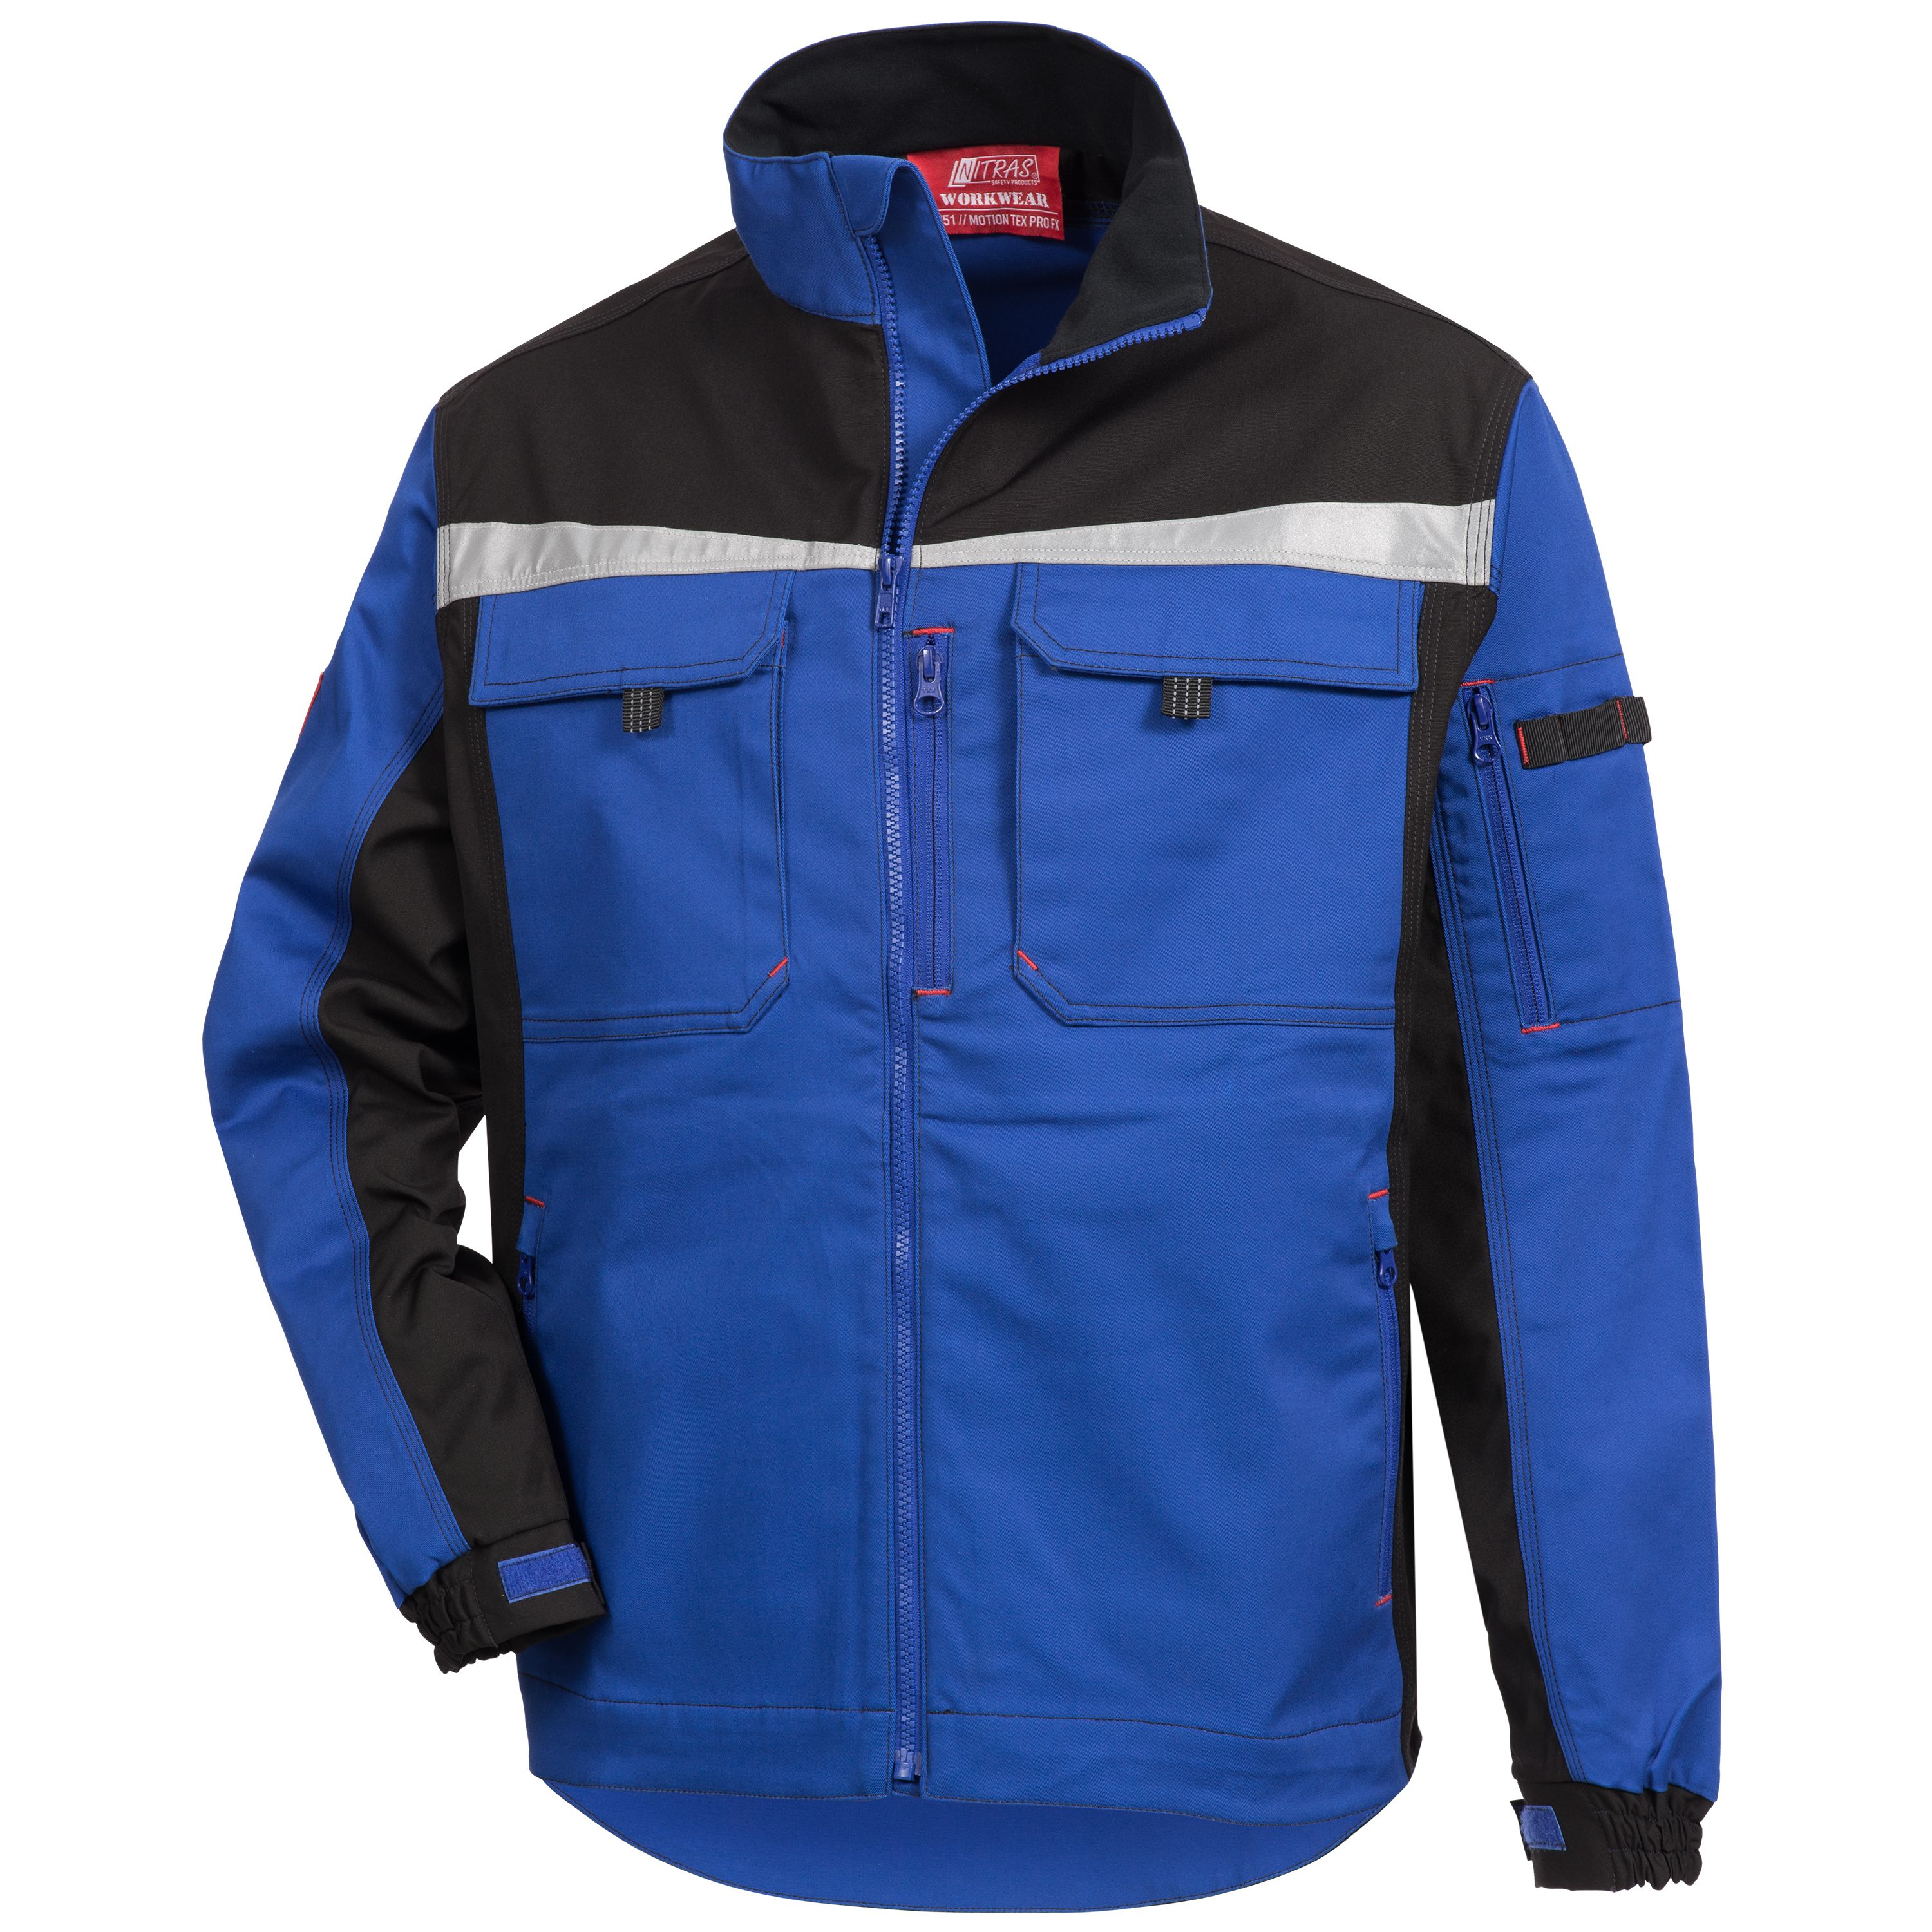 Nitras Motion Tex Pro FX 7751 Waist Jacket for Work - Blue - 56